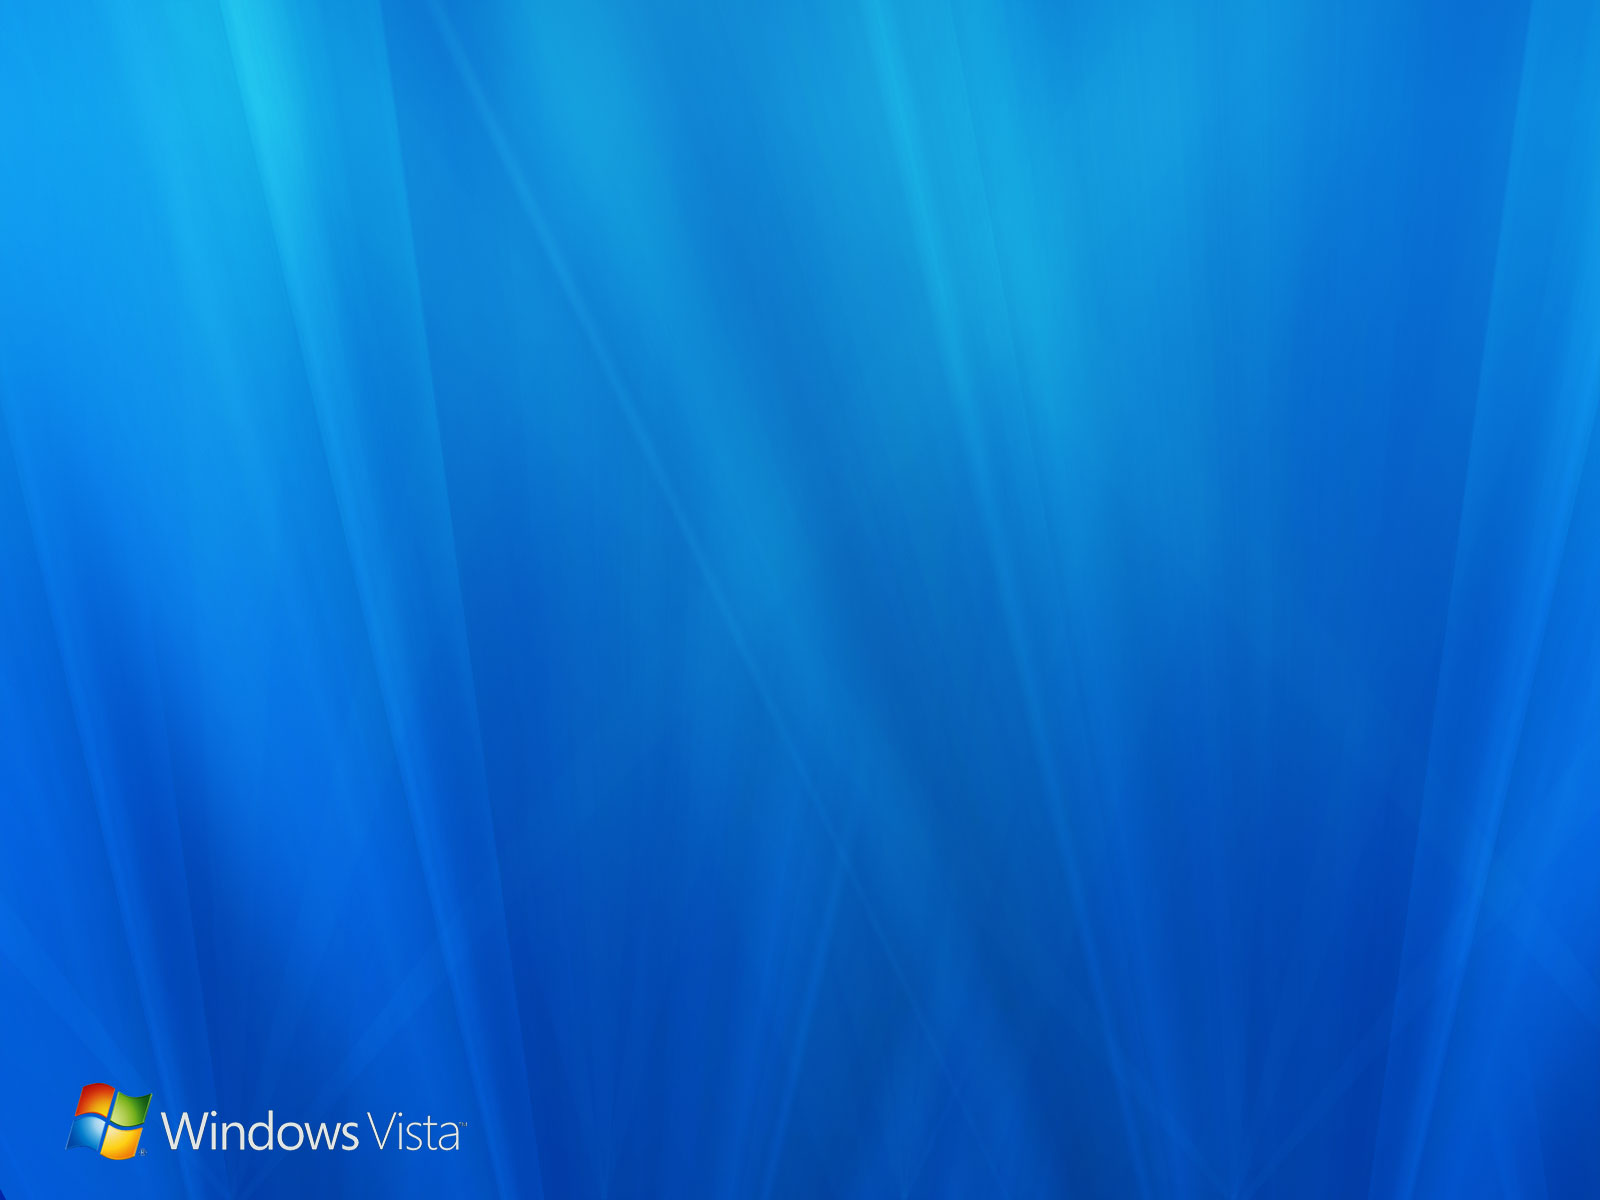 Free Download Windows Vista All Blue Wallpaper Geekpedia 1600x10 For Your Desktop Mobile Tablet Explore 46 Windows Blue Wallpaper Blue Hd Wallpaper 19x1080 Blue Wallpaper Blue Desktop Wallpapers